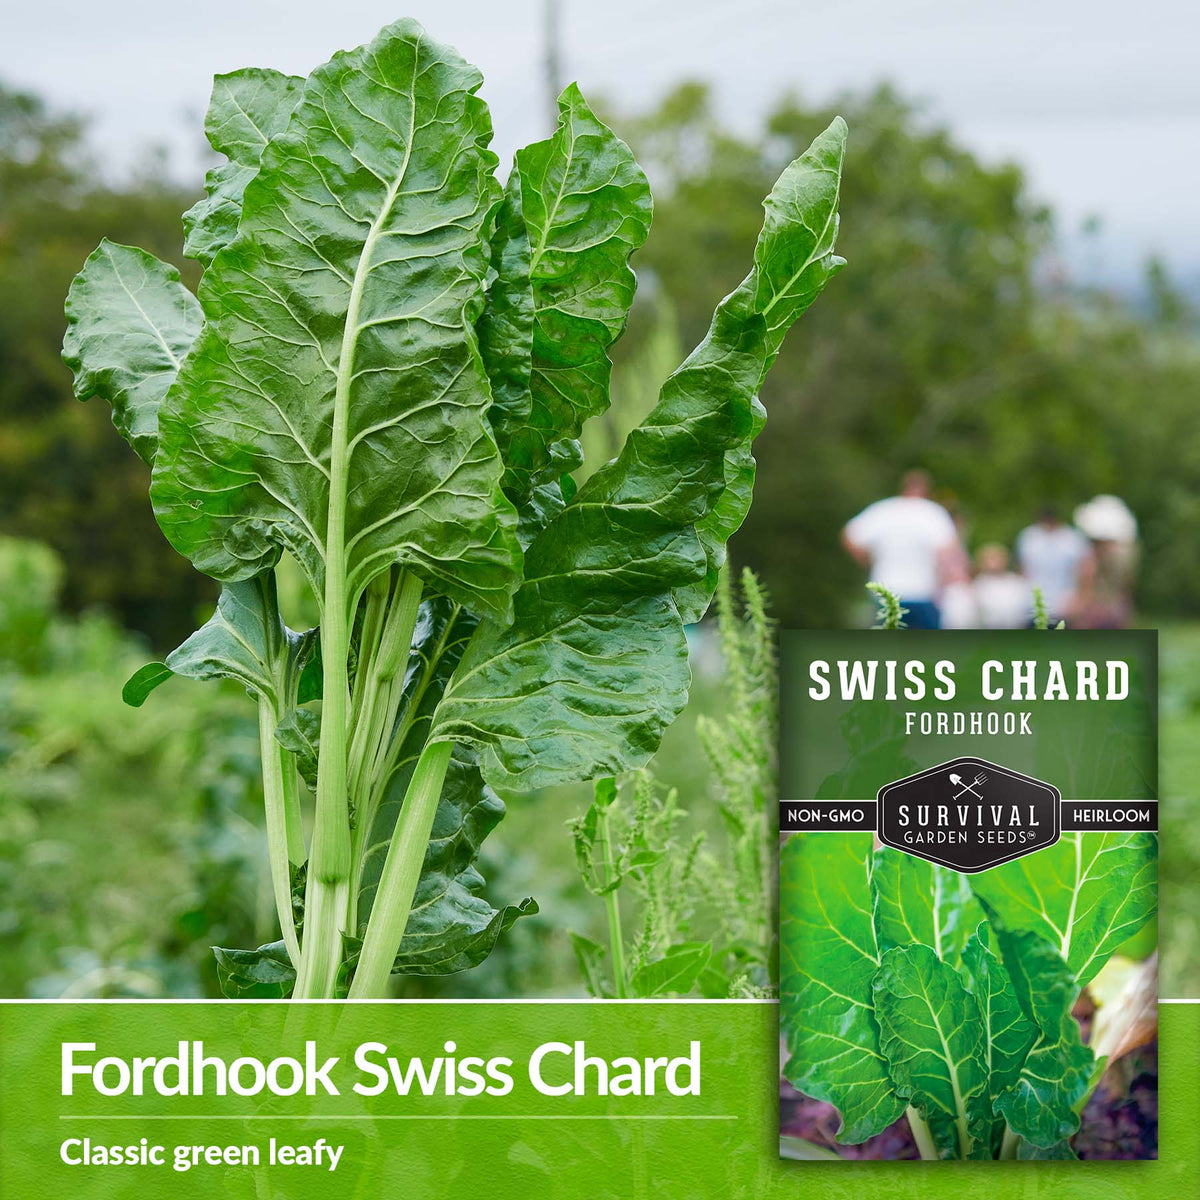 Fordhook Swish Chard is a classic green leafy veg